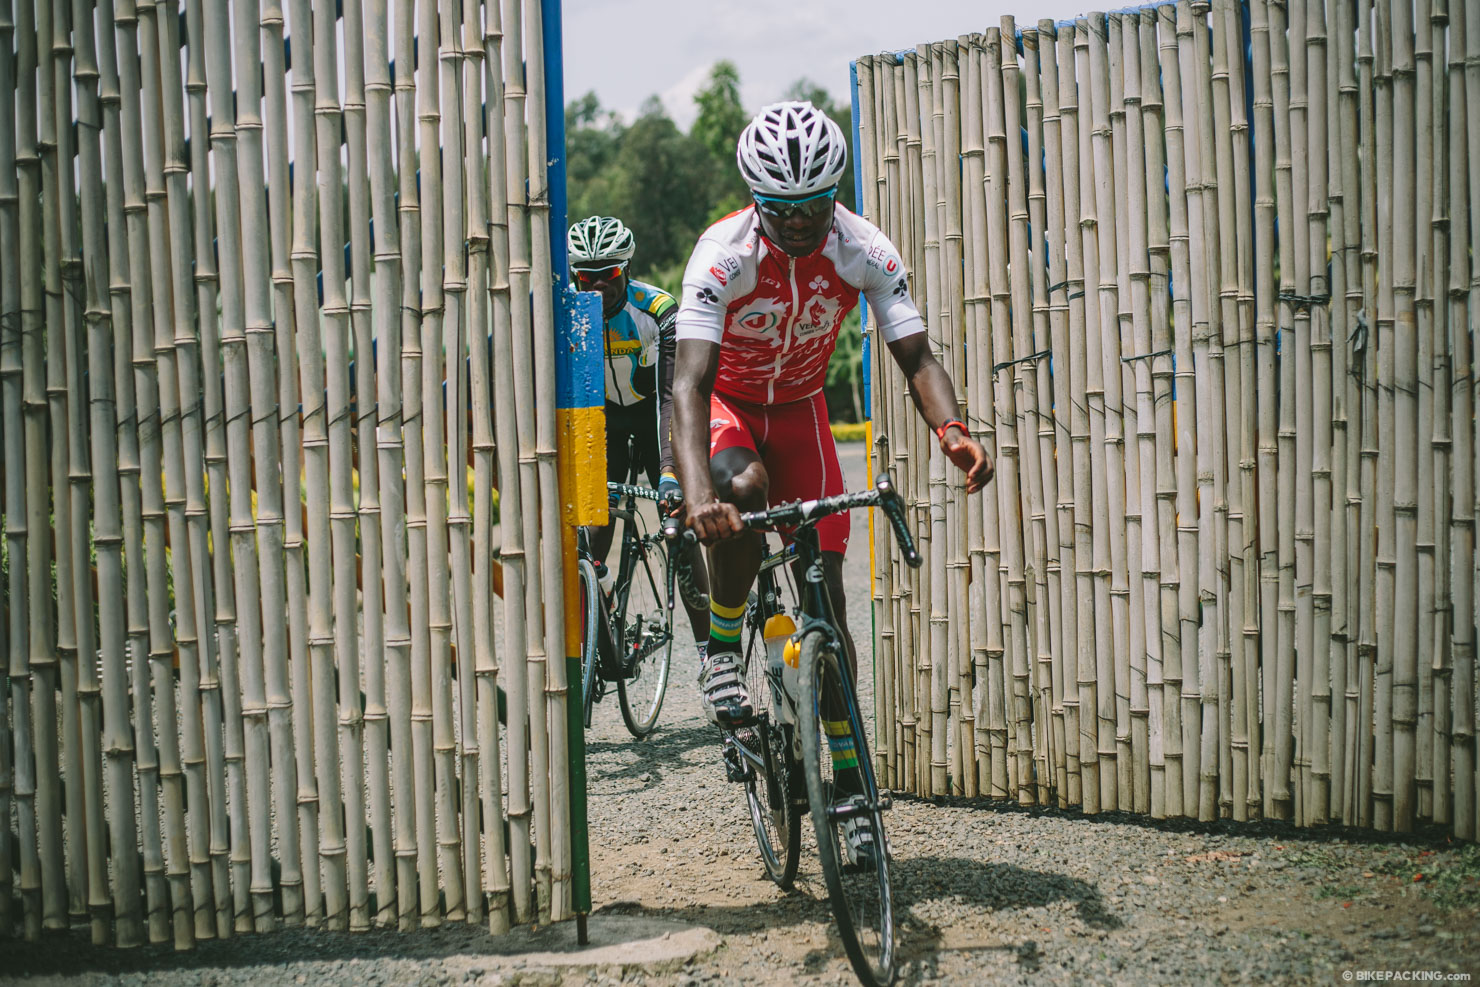 Team Rwanda, Africa Rising Cycling Center